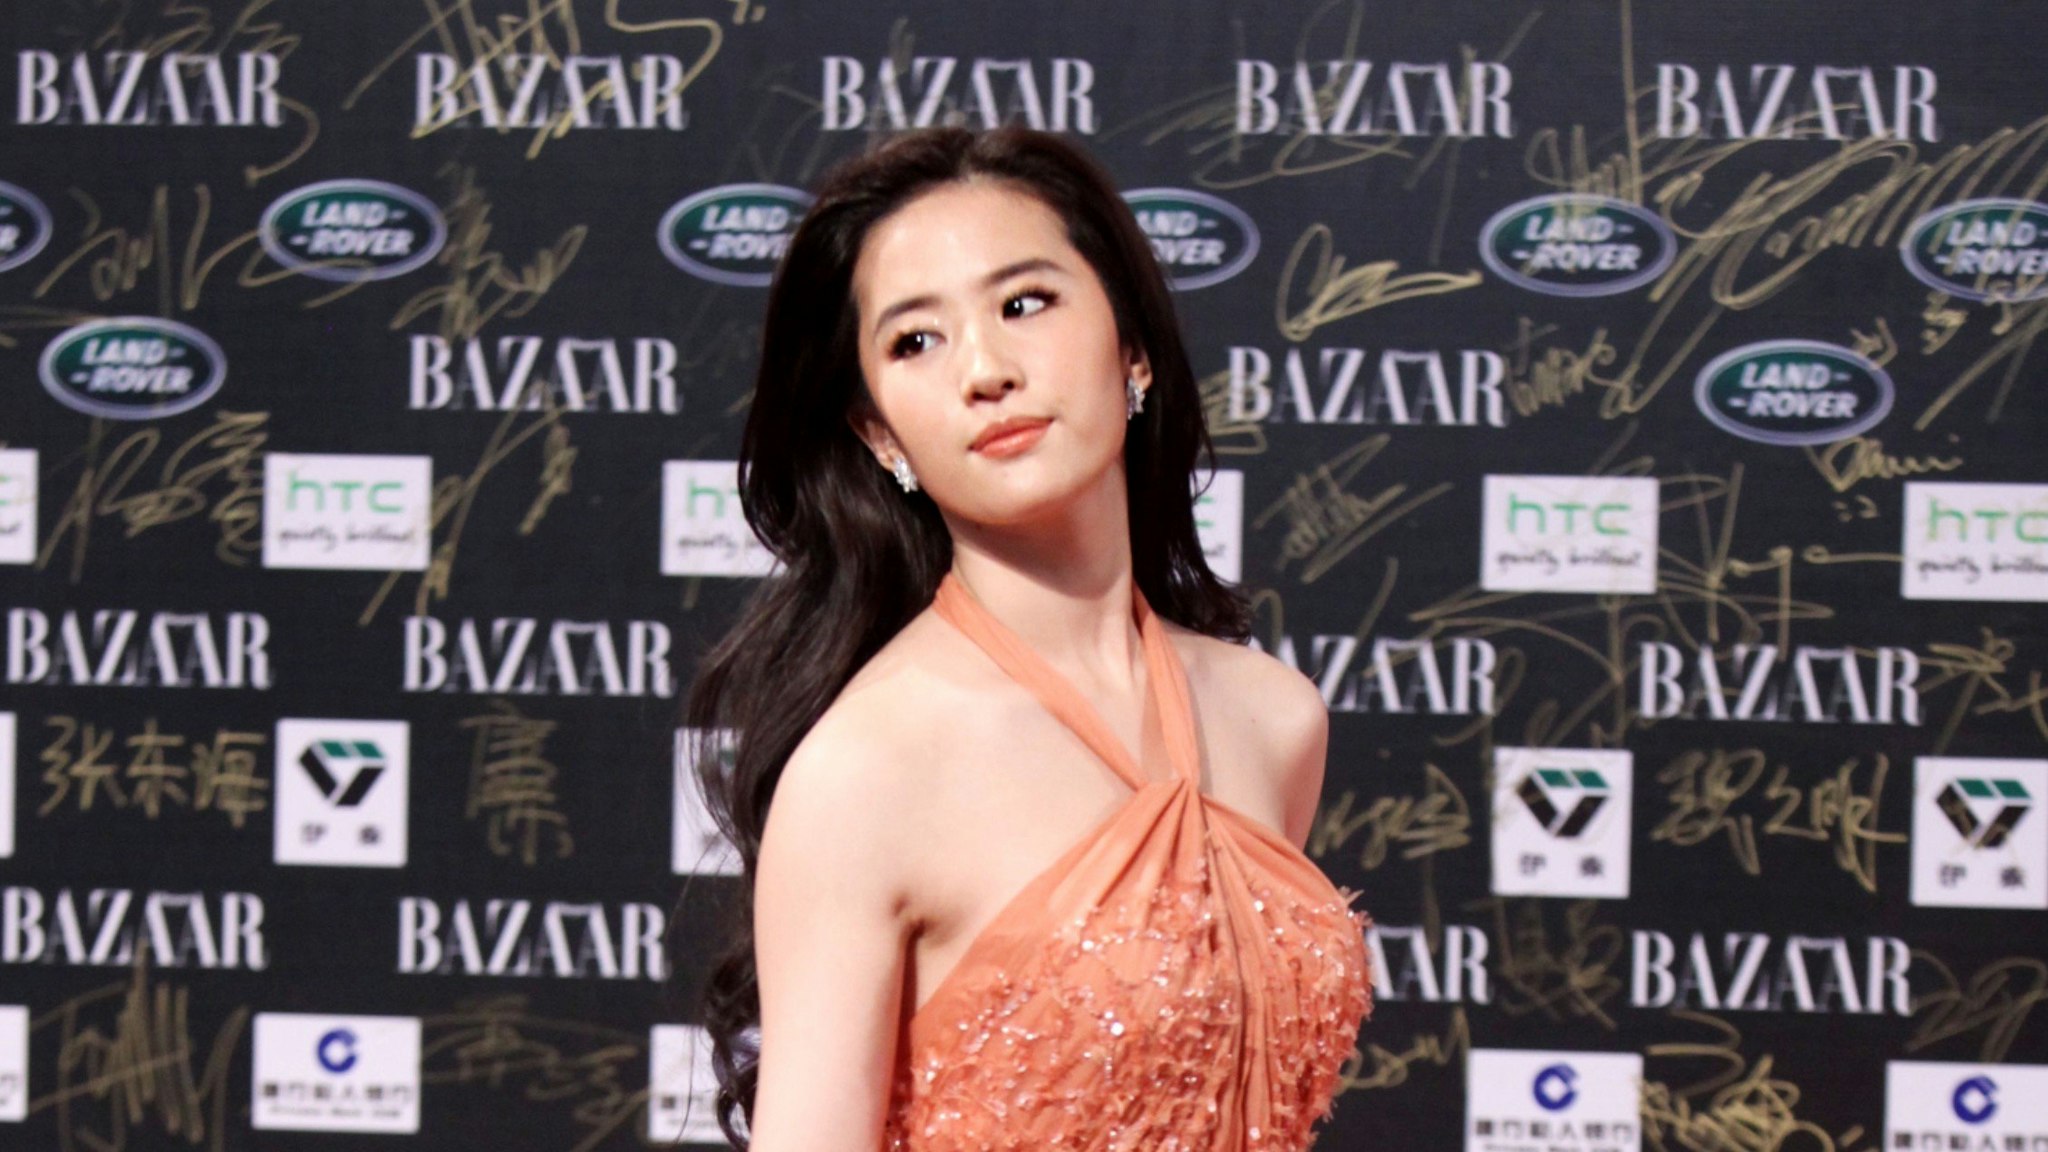 Chinese actress Liu Yifei attends the 2011 BAZAAR Charity Night at Park Hyatt Beijing Hotel on September 14, 2011 in Beijing, China.